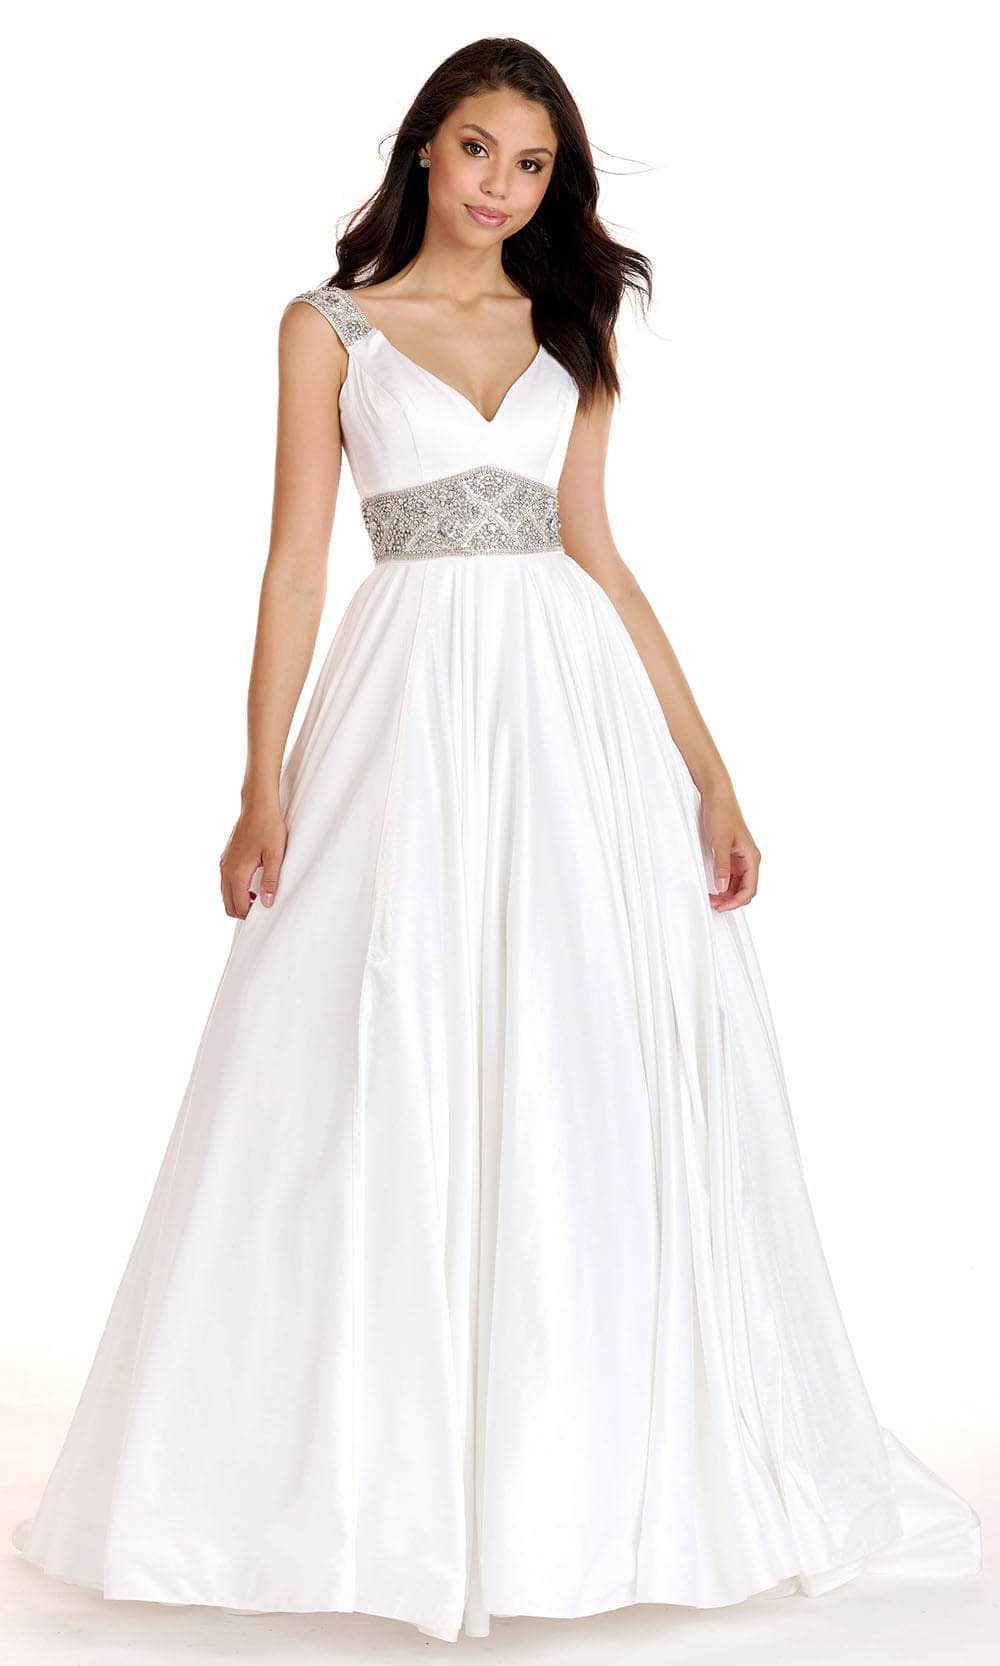 Image of Ava Presley 27796 - Jeweled Waist Prom Dress